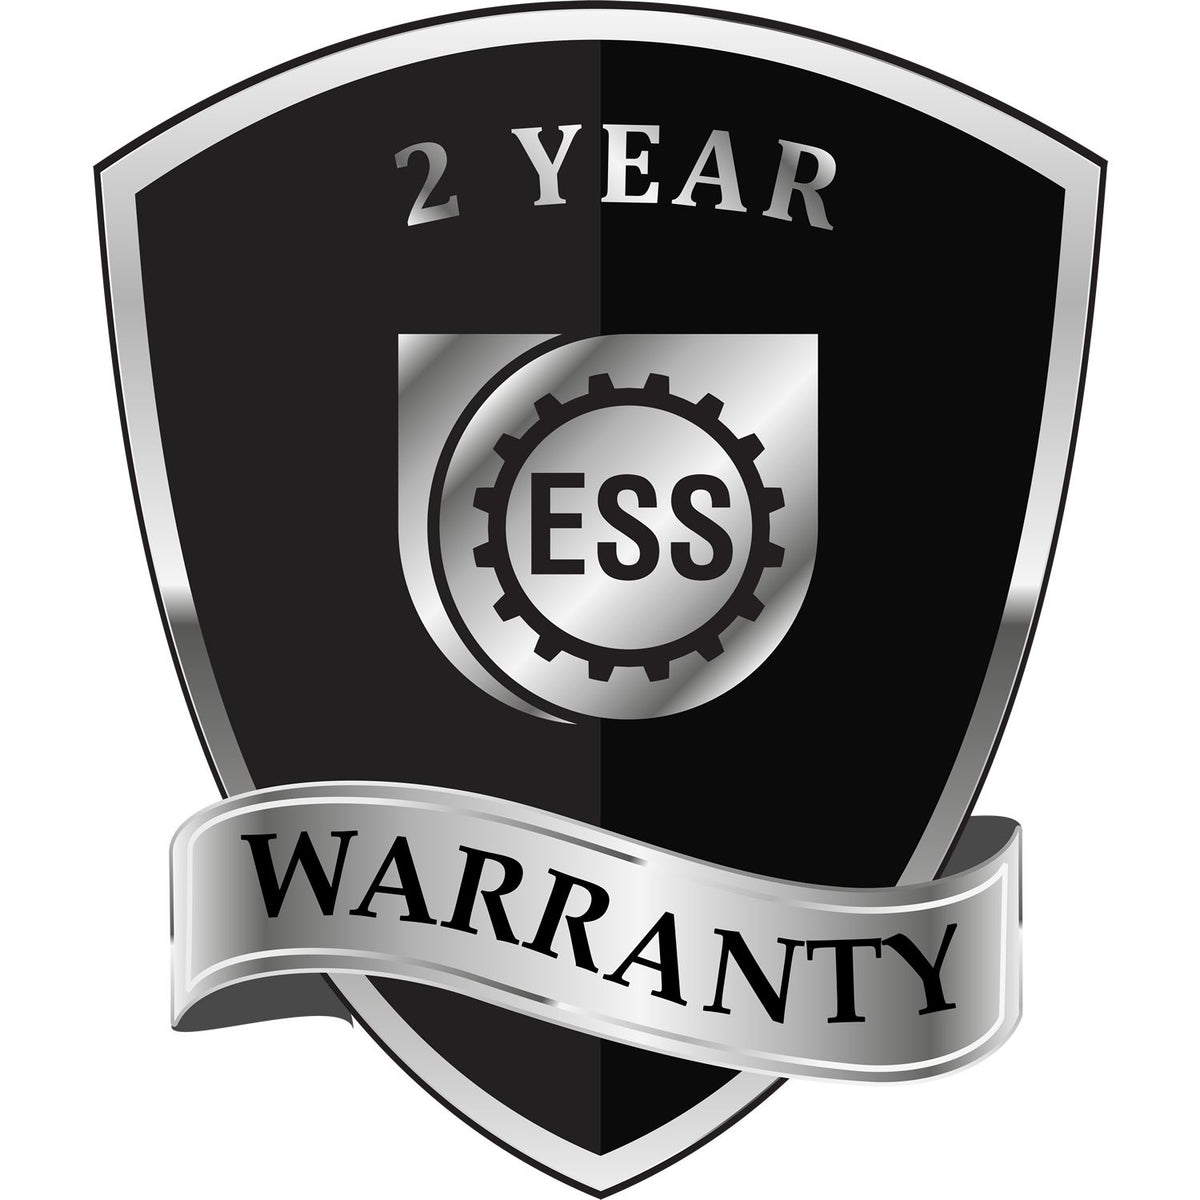 A black and silver badge or emblem showing warranty information for the Hybrid Minnesota Land Surveyor Seal